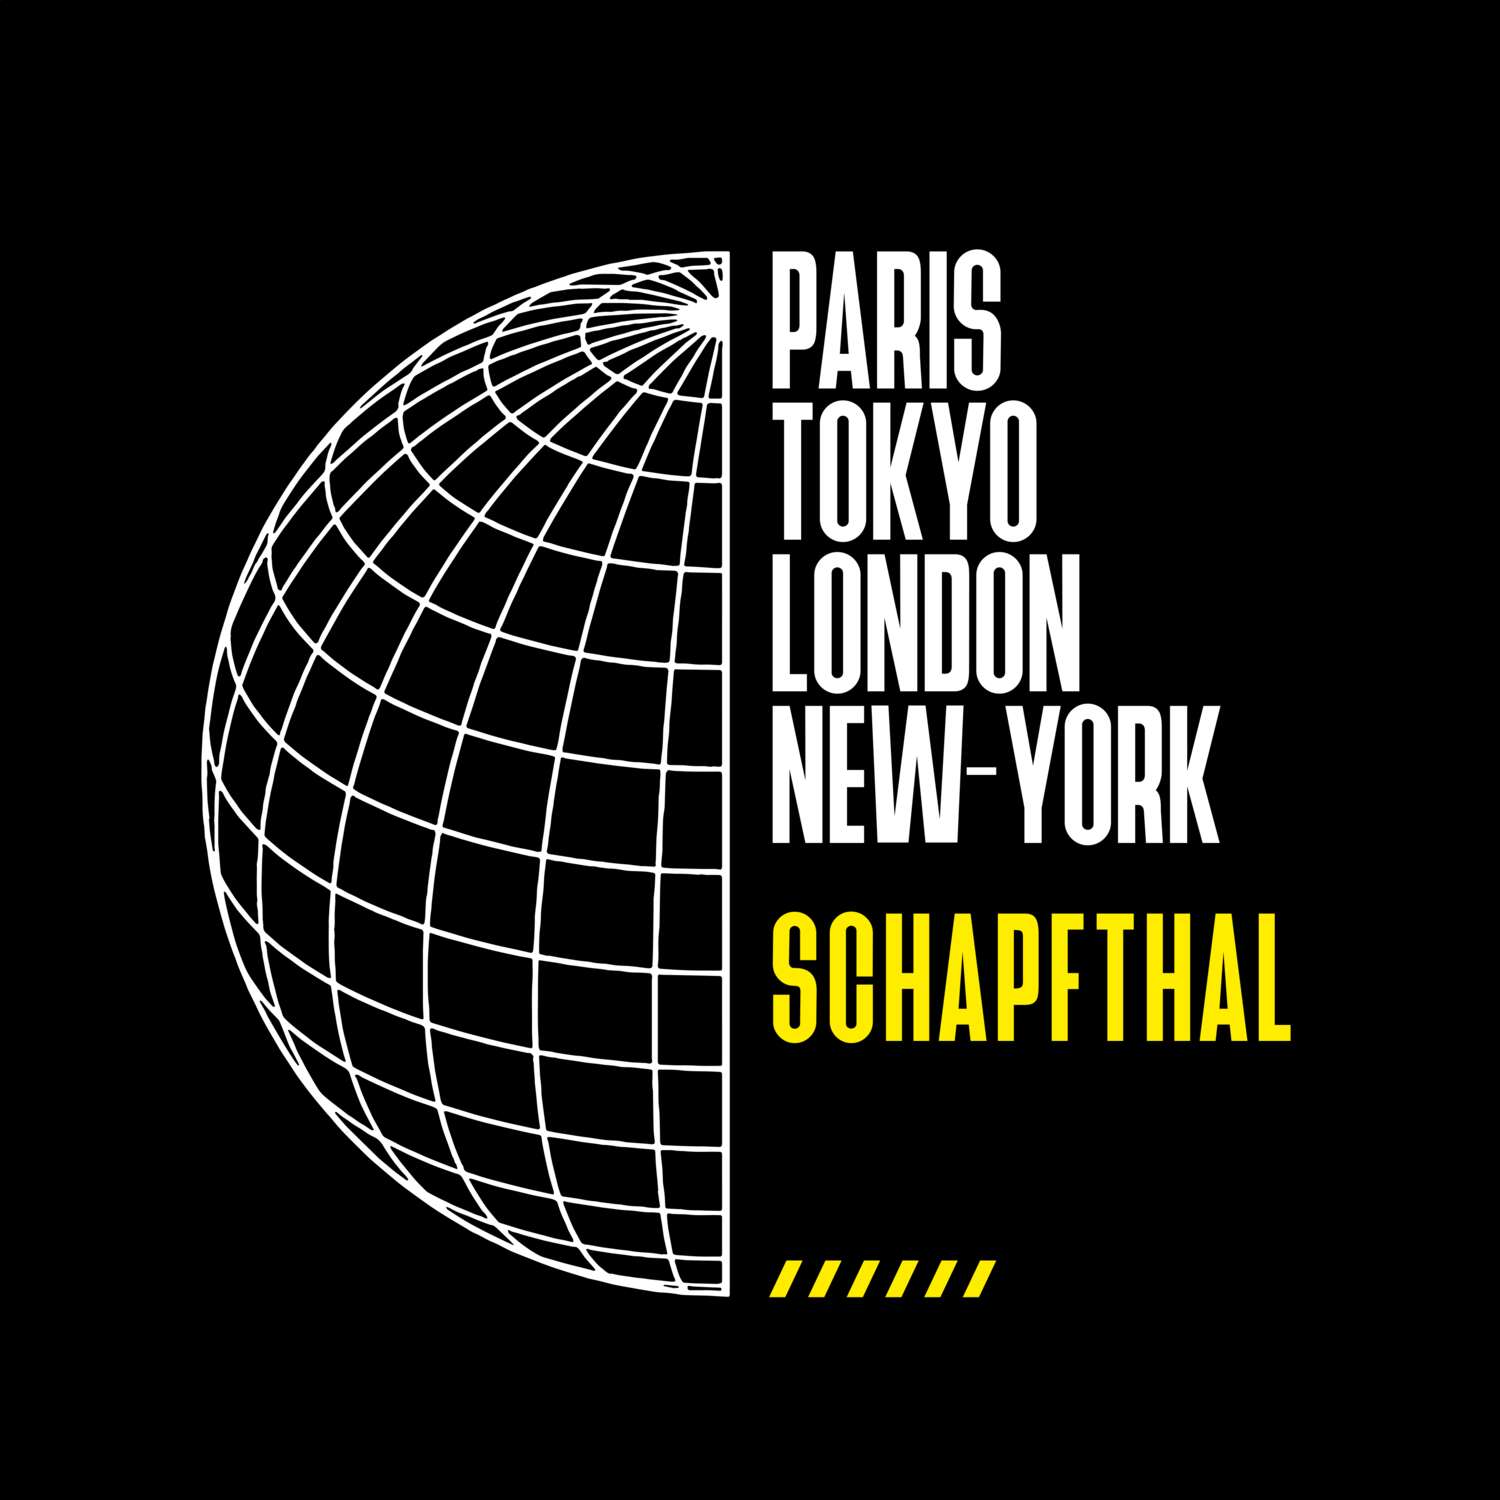 Schapfthal T-Shirt »Paris Tokyo London«